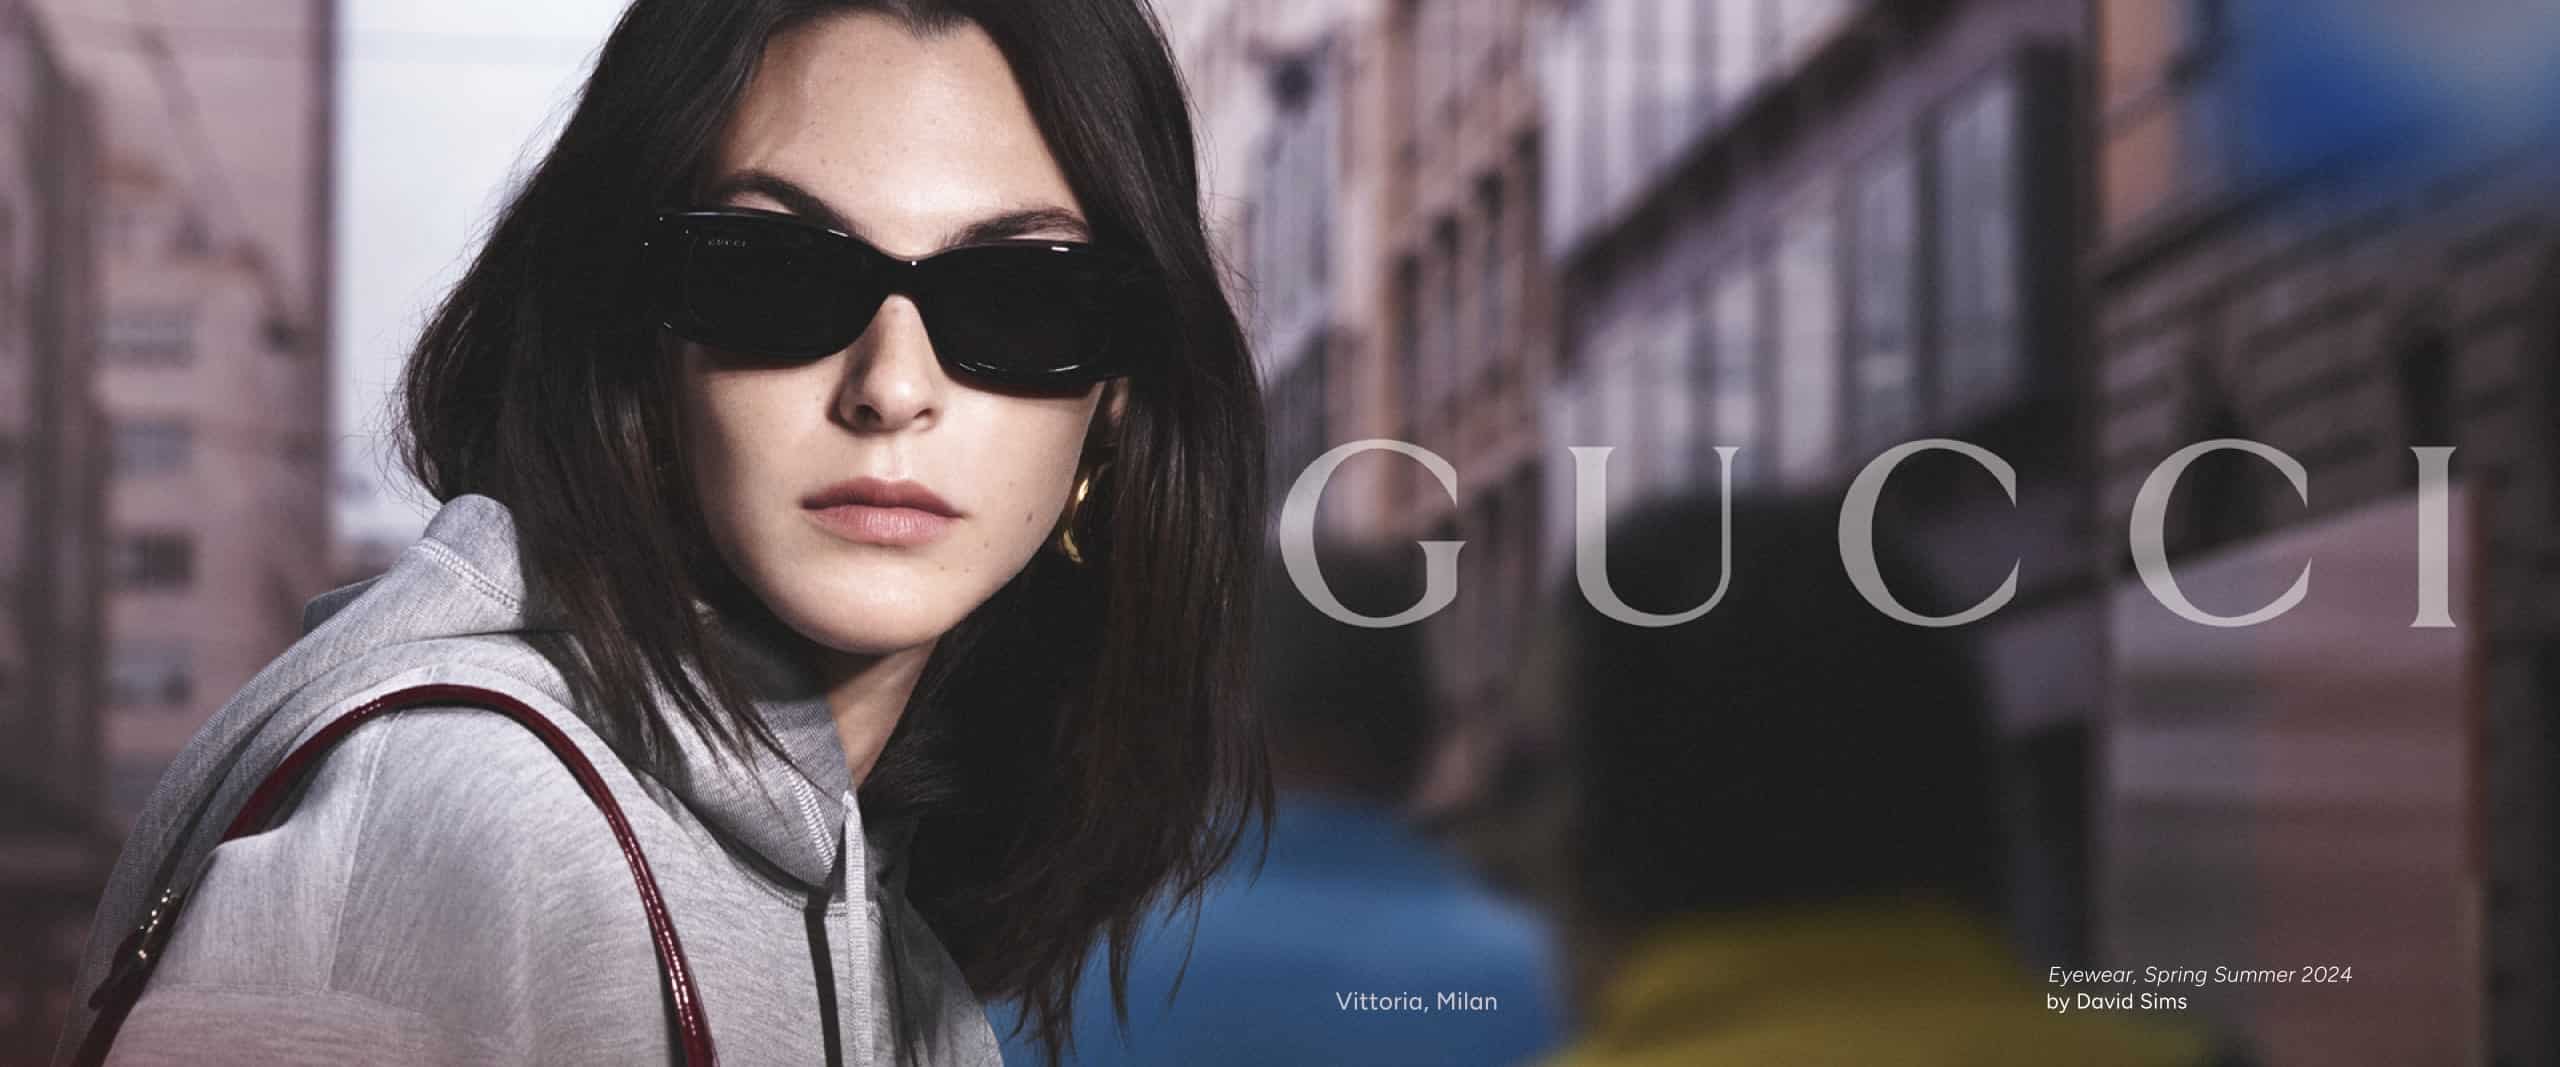 Gucci Sunglasses 2 Collection Image